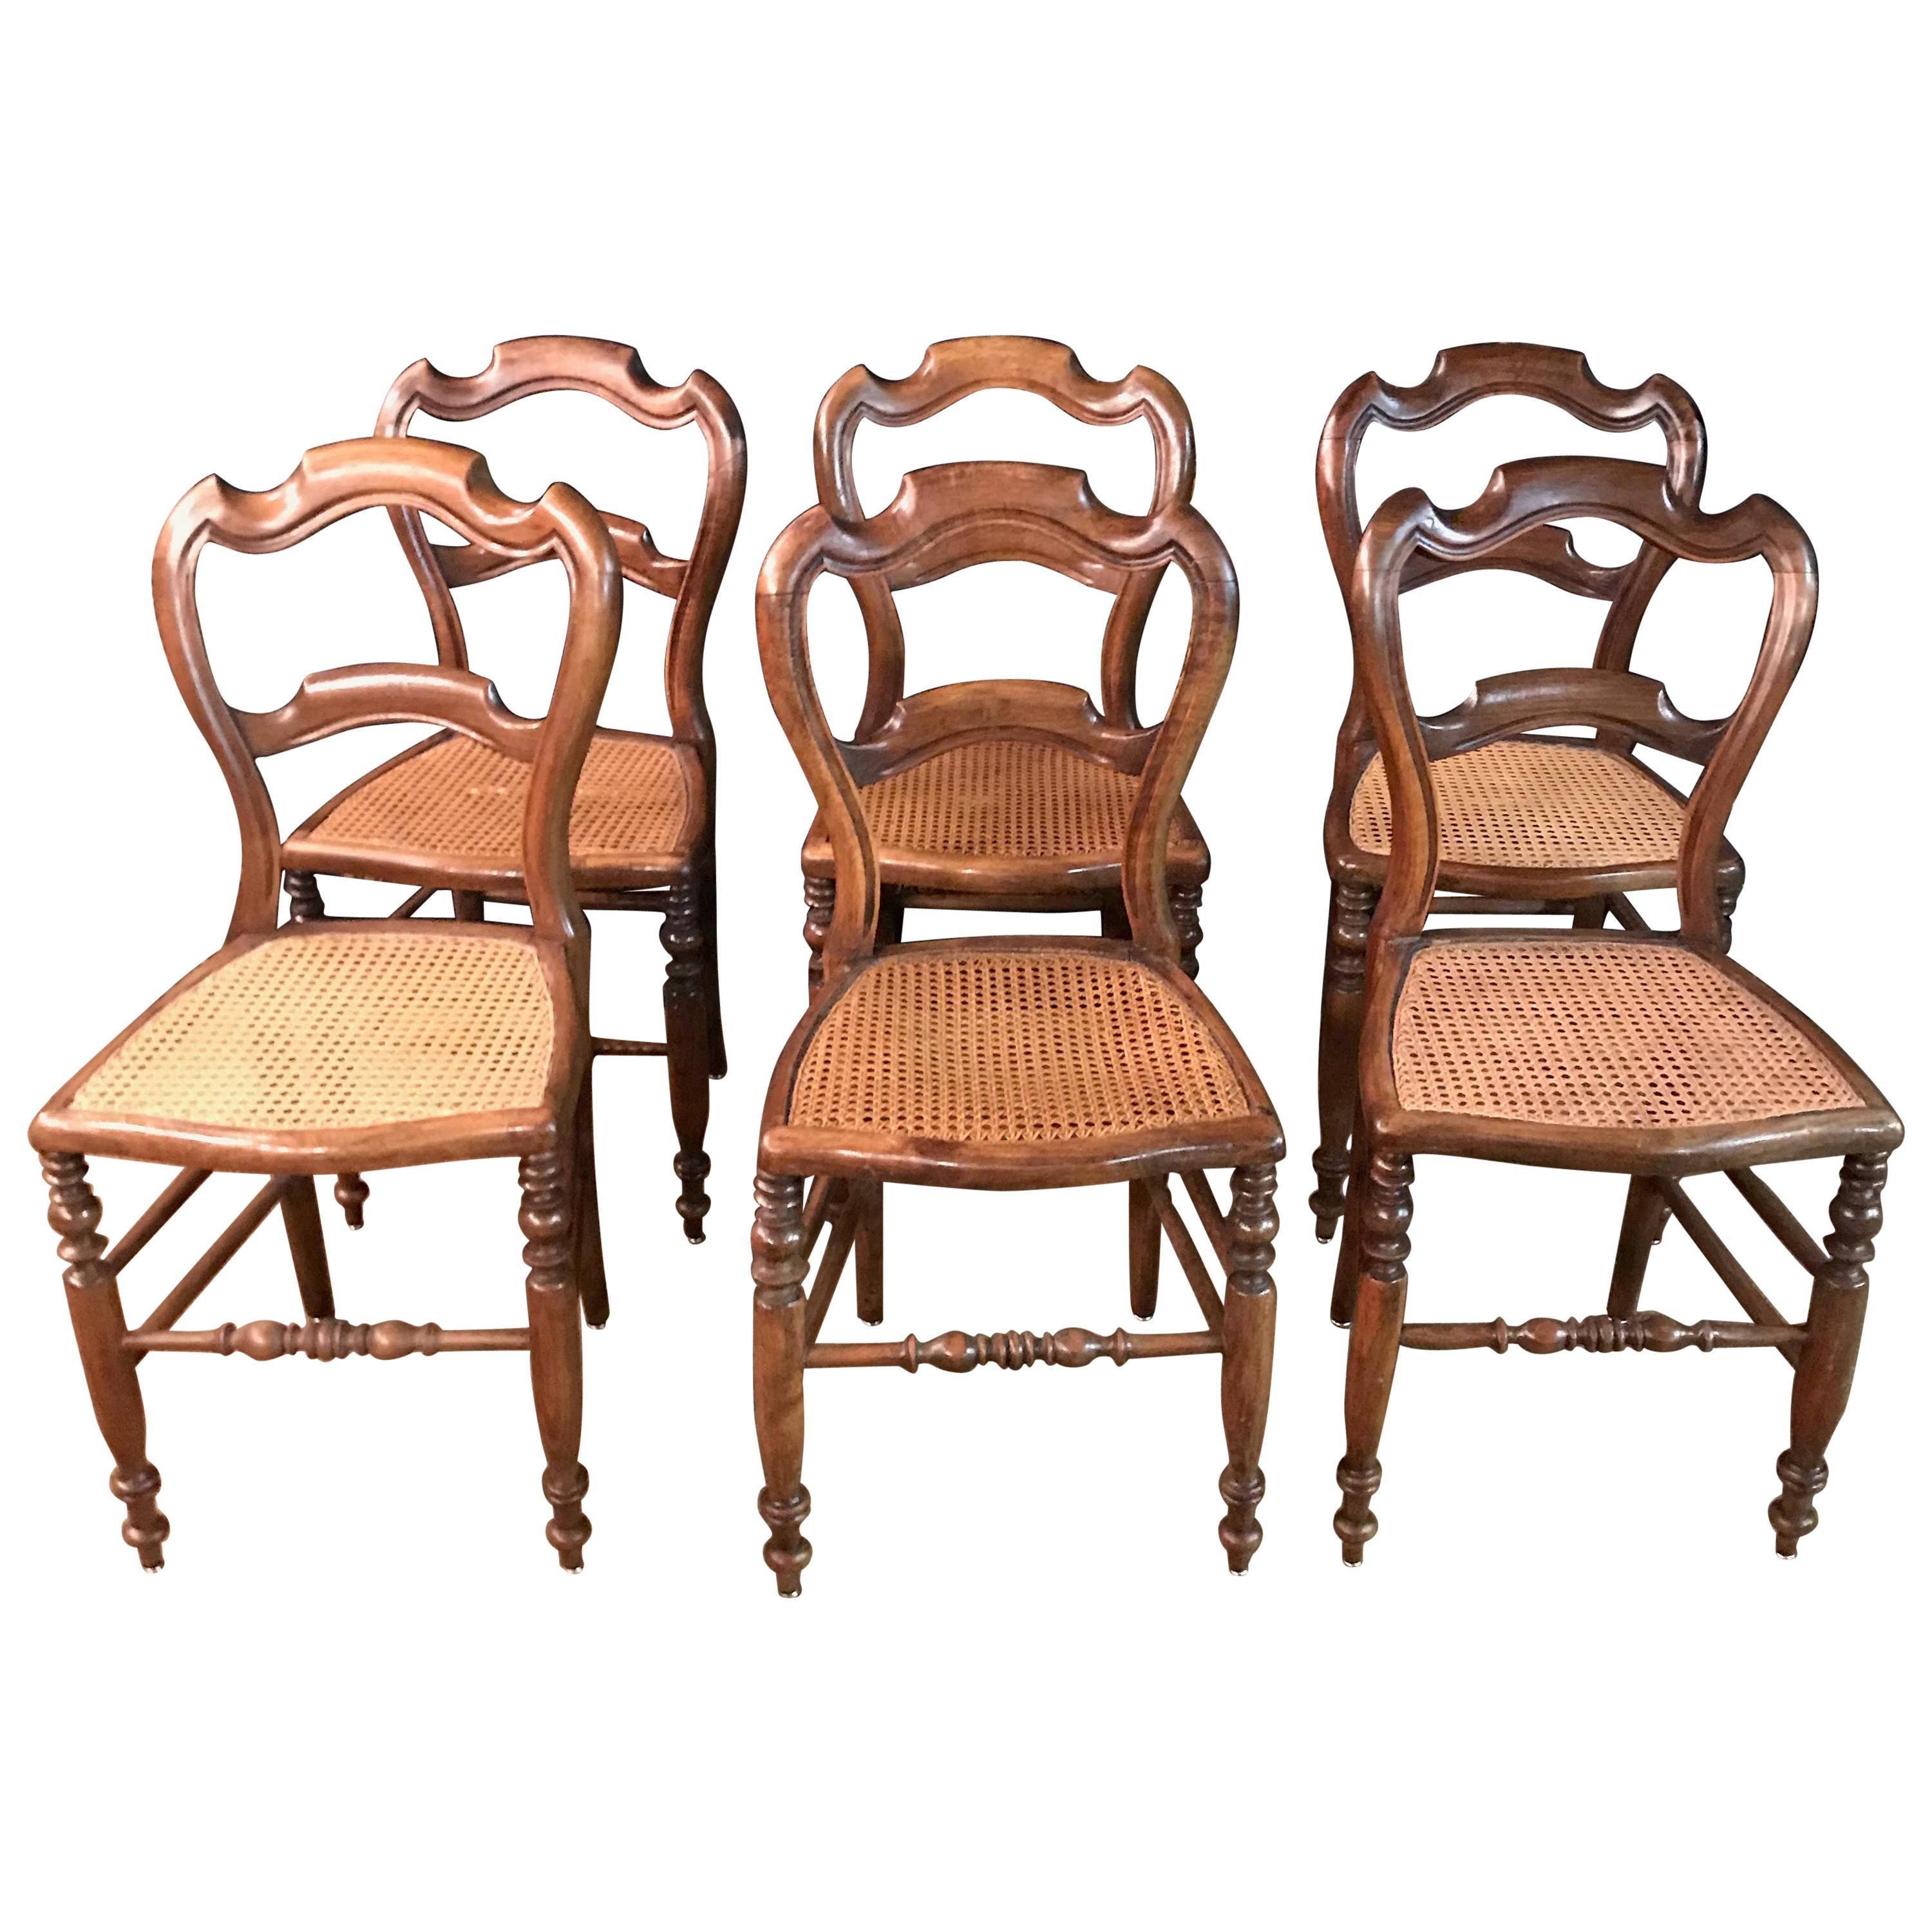 6 Original Biedermeier-Stühle, Cafhaus-Sitzgewebe, ca. 1850-1860, massives Mahagoni